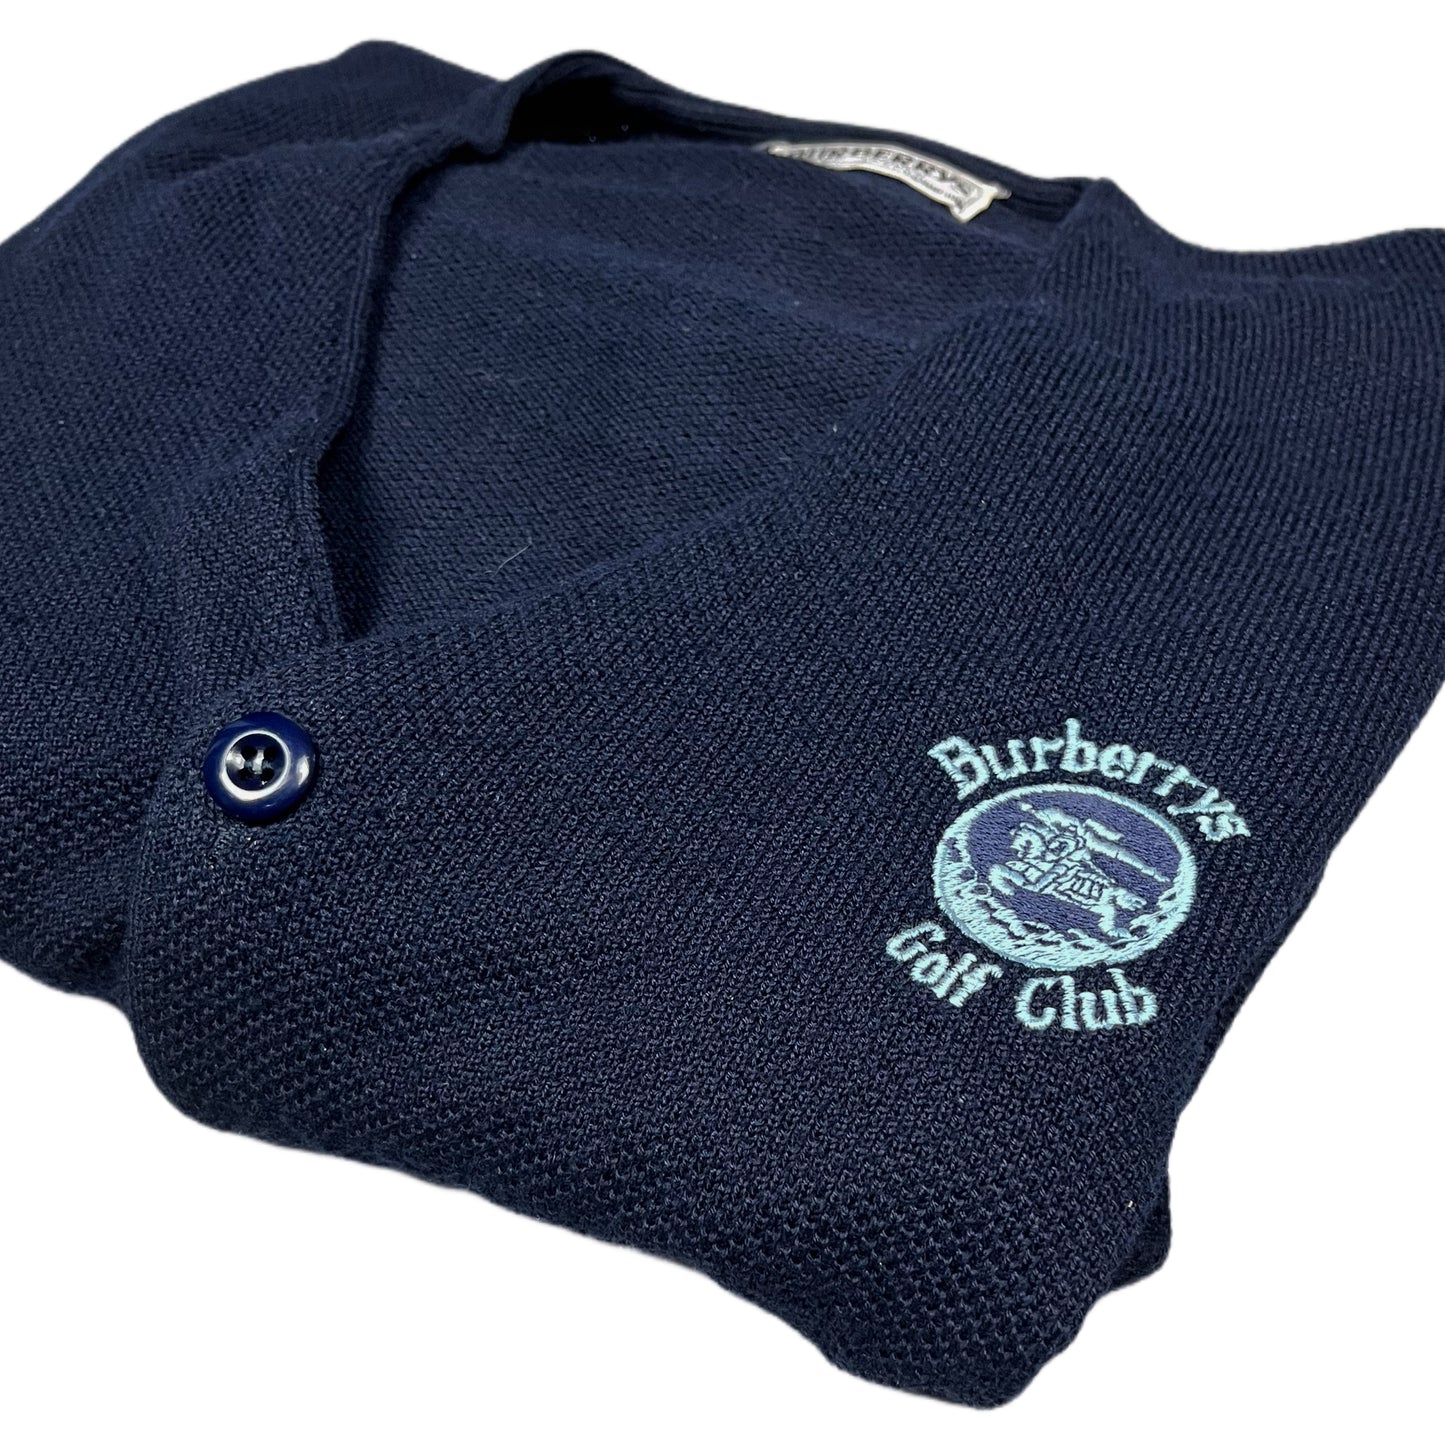 Burberry Golf Knit Cardigan Vintage